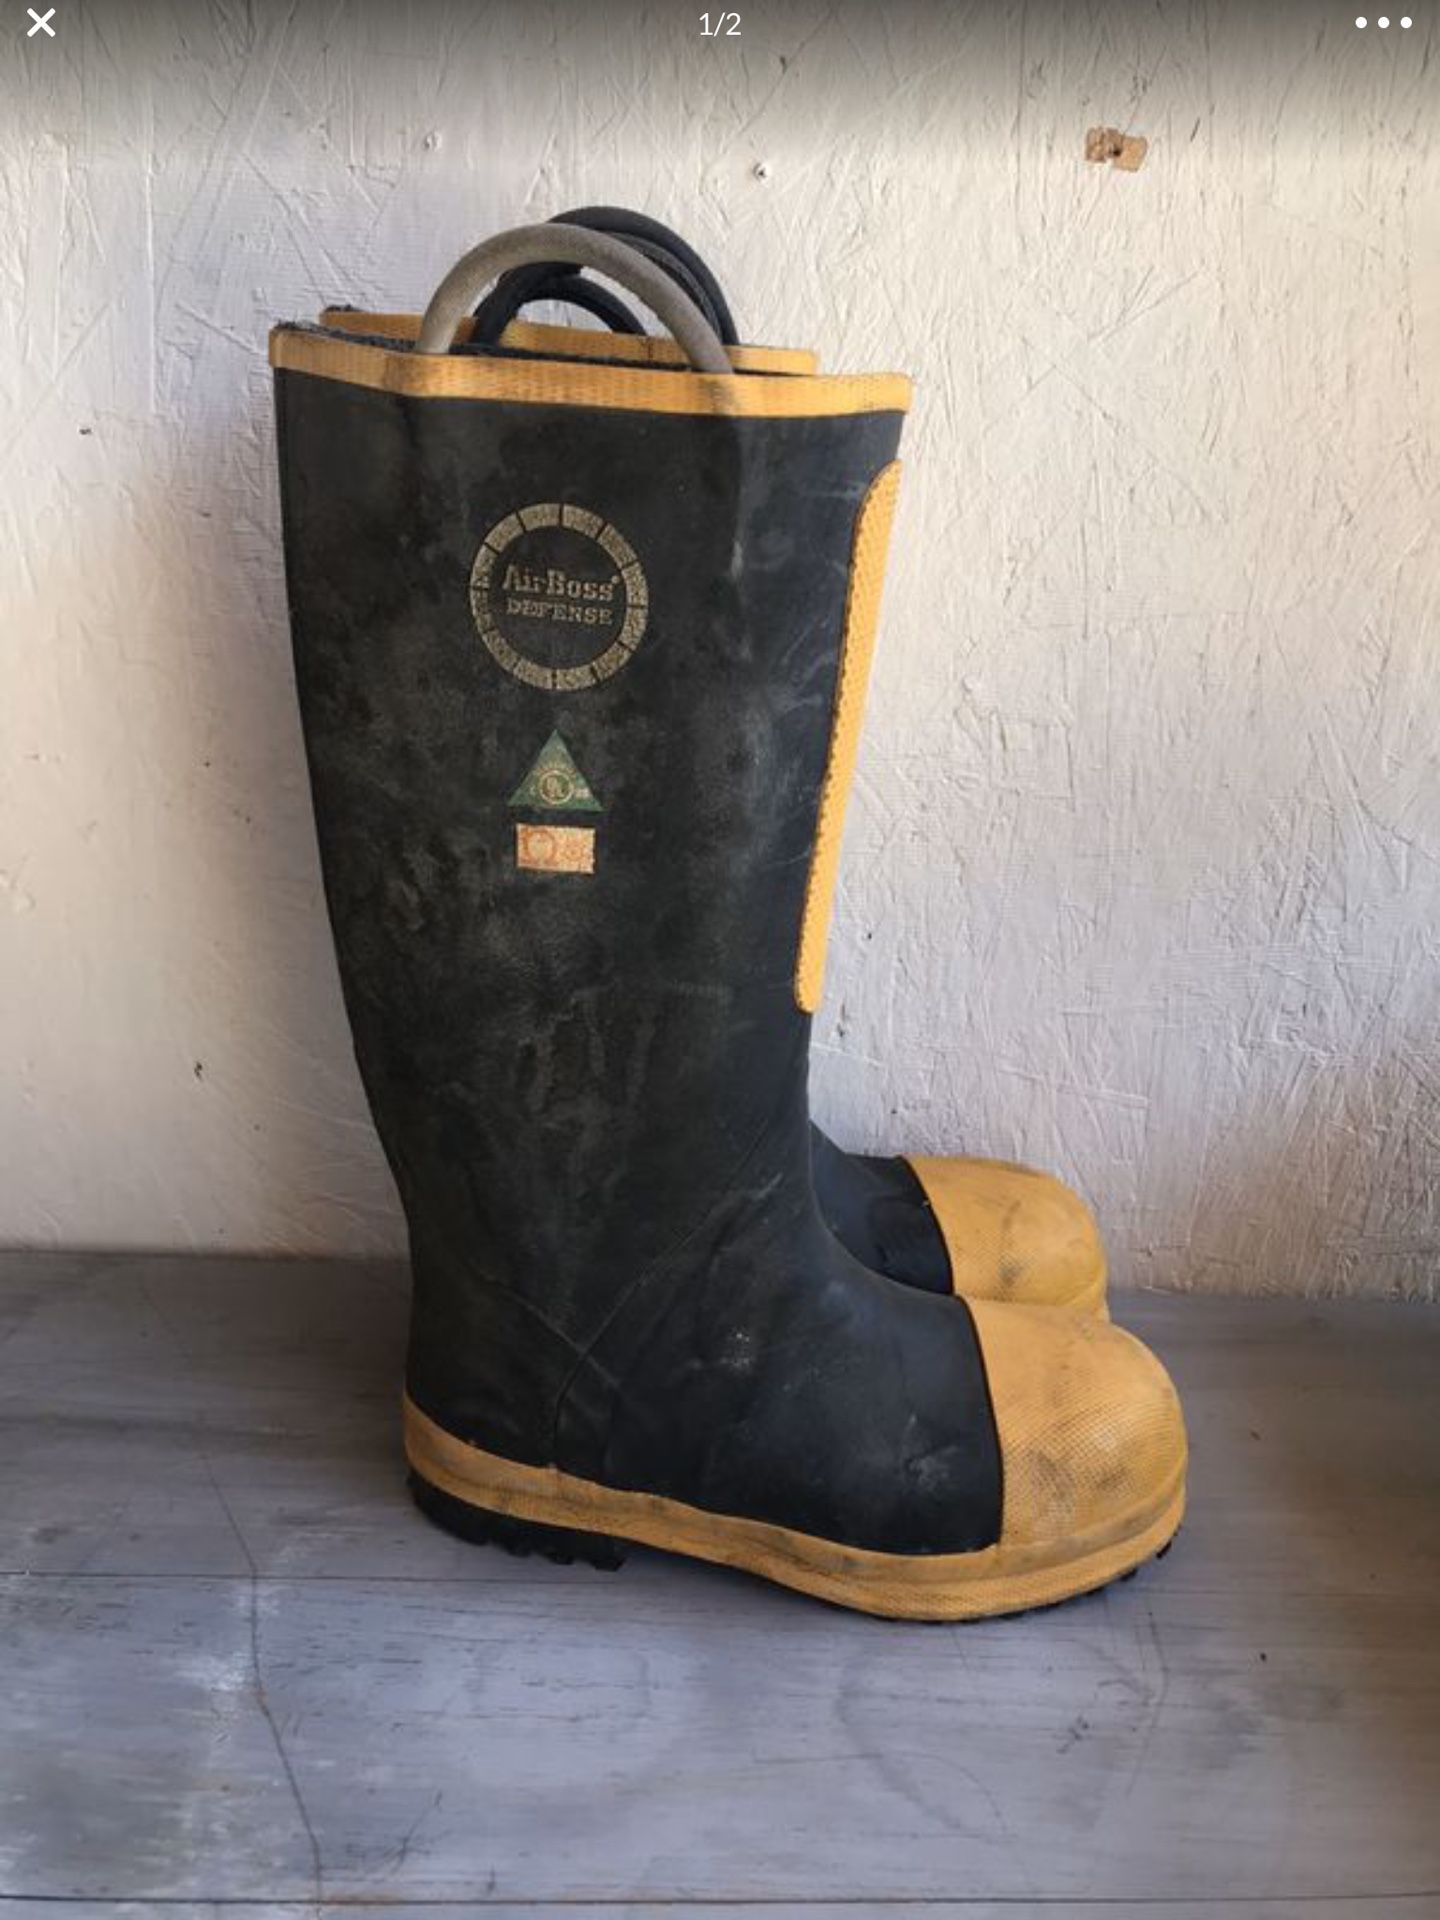 Construction rain boots